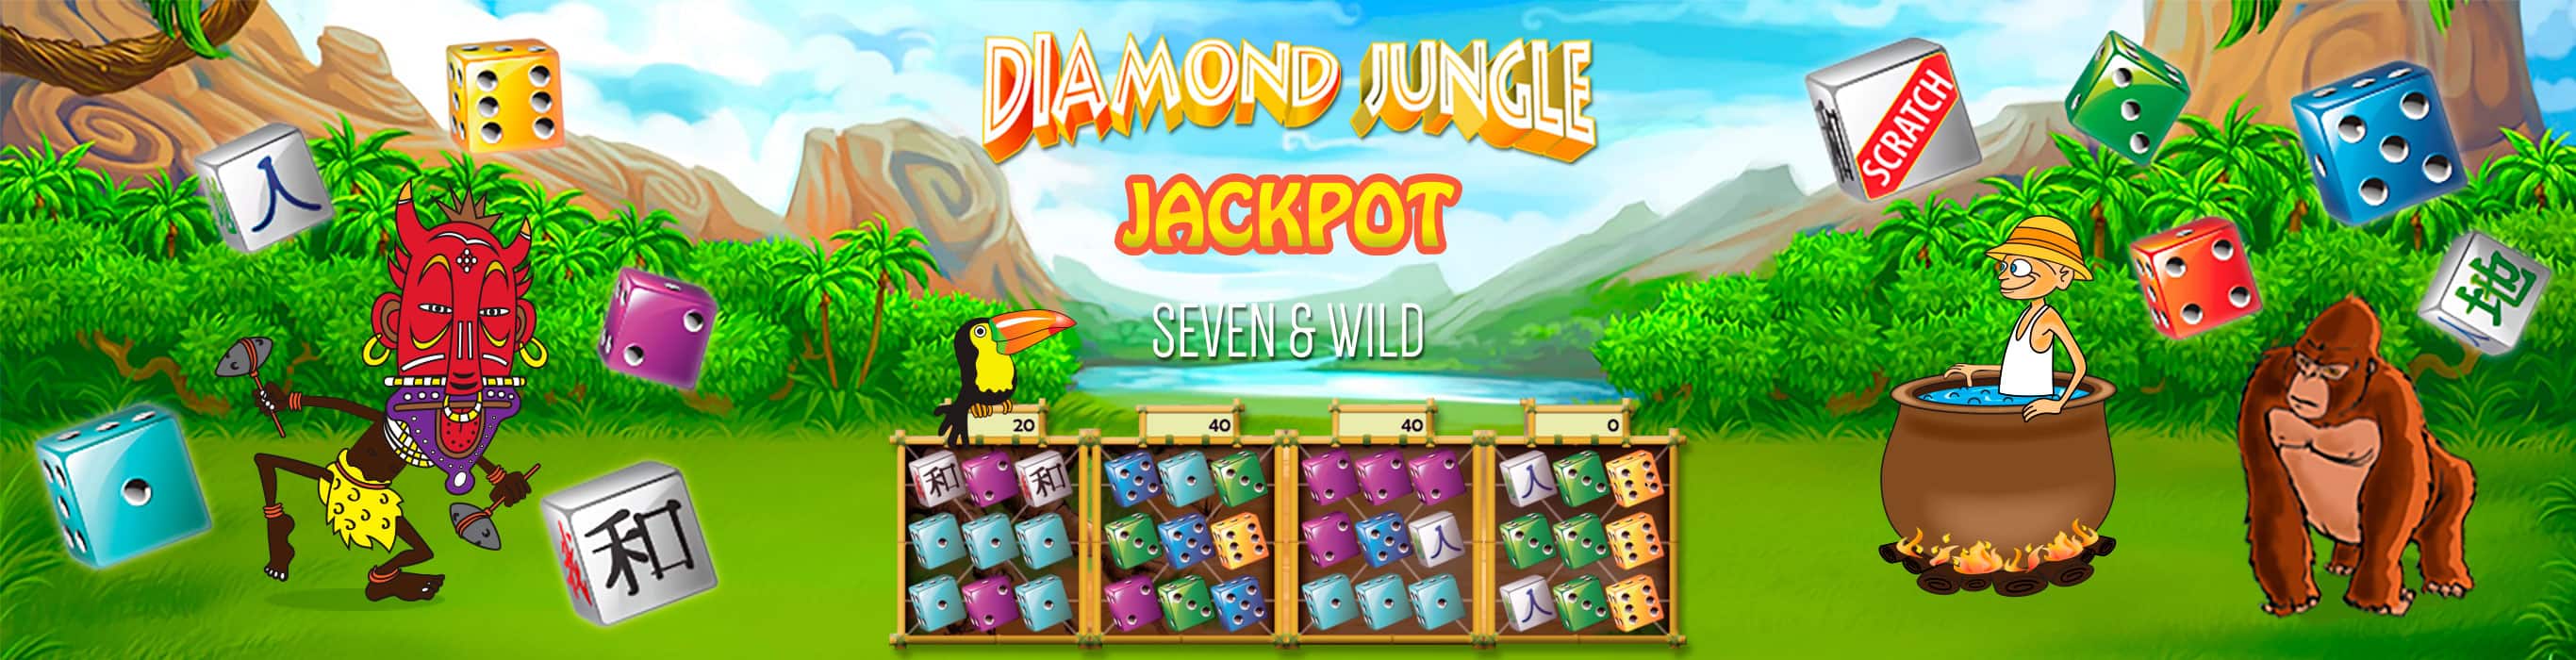 diamond-jungle-jackpot-36win-banner-2732x700